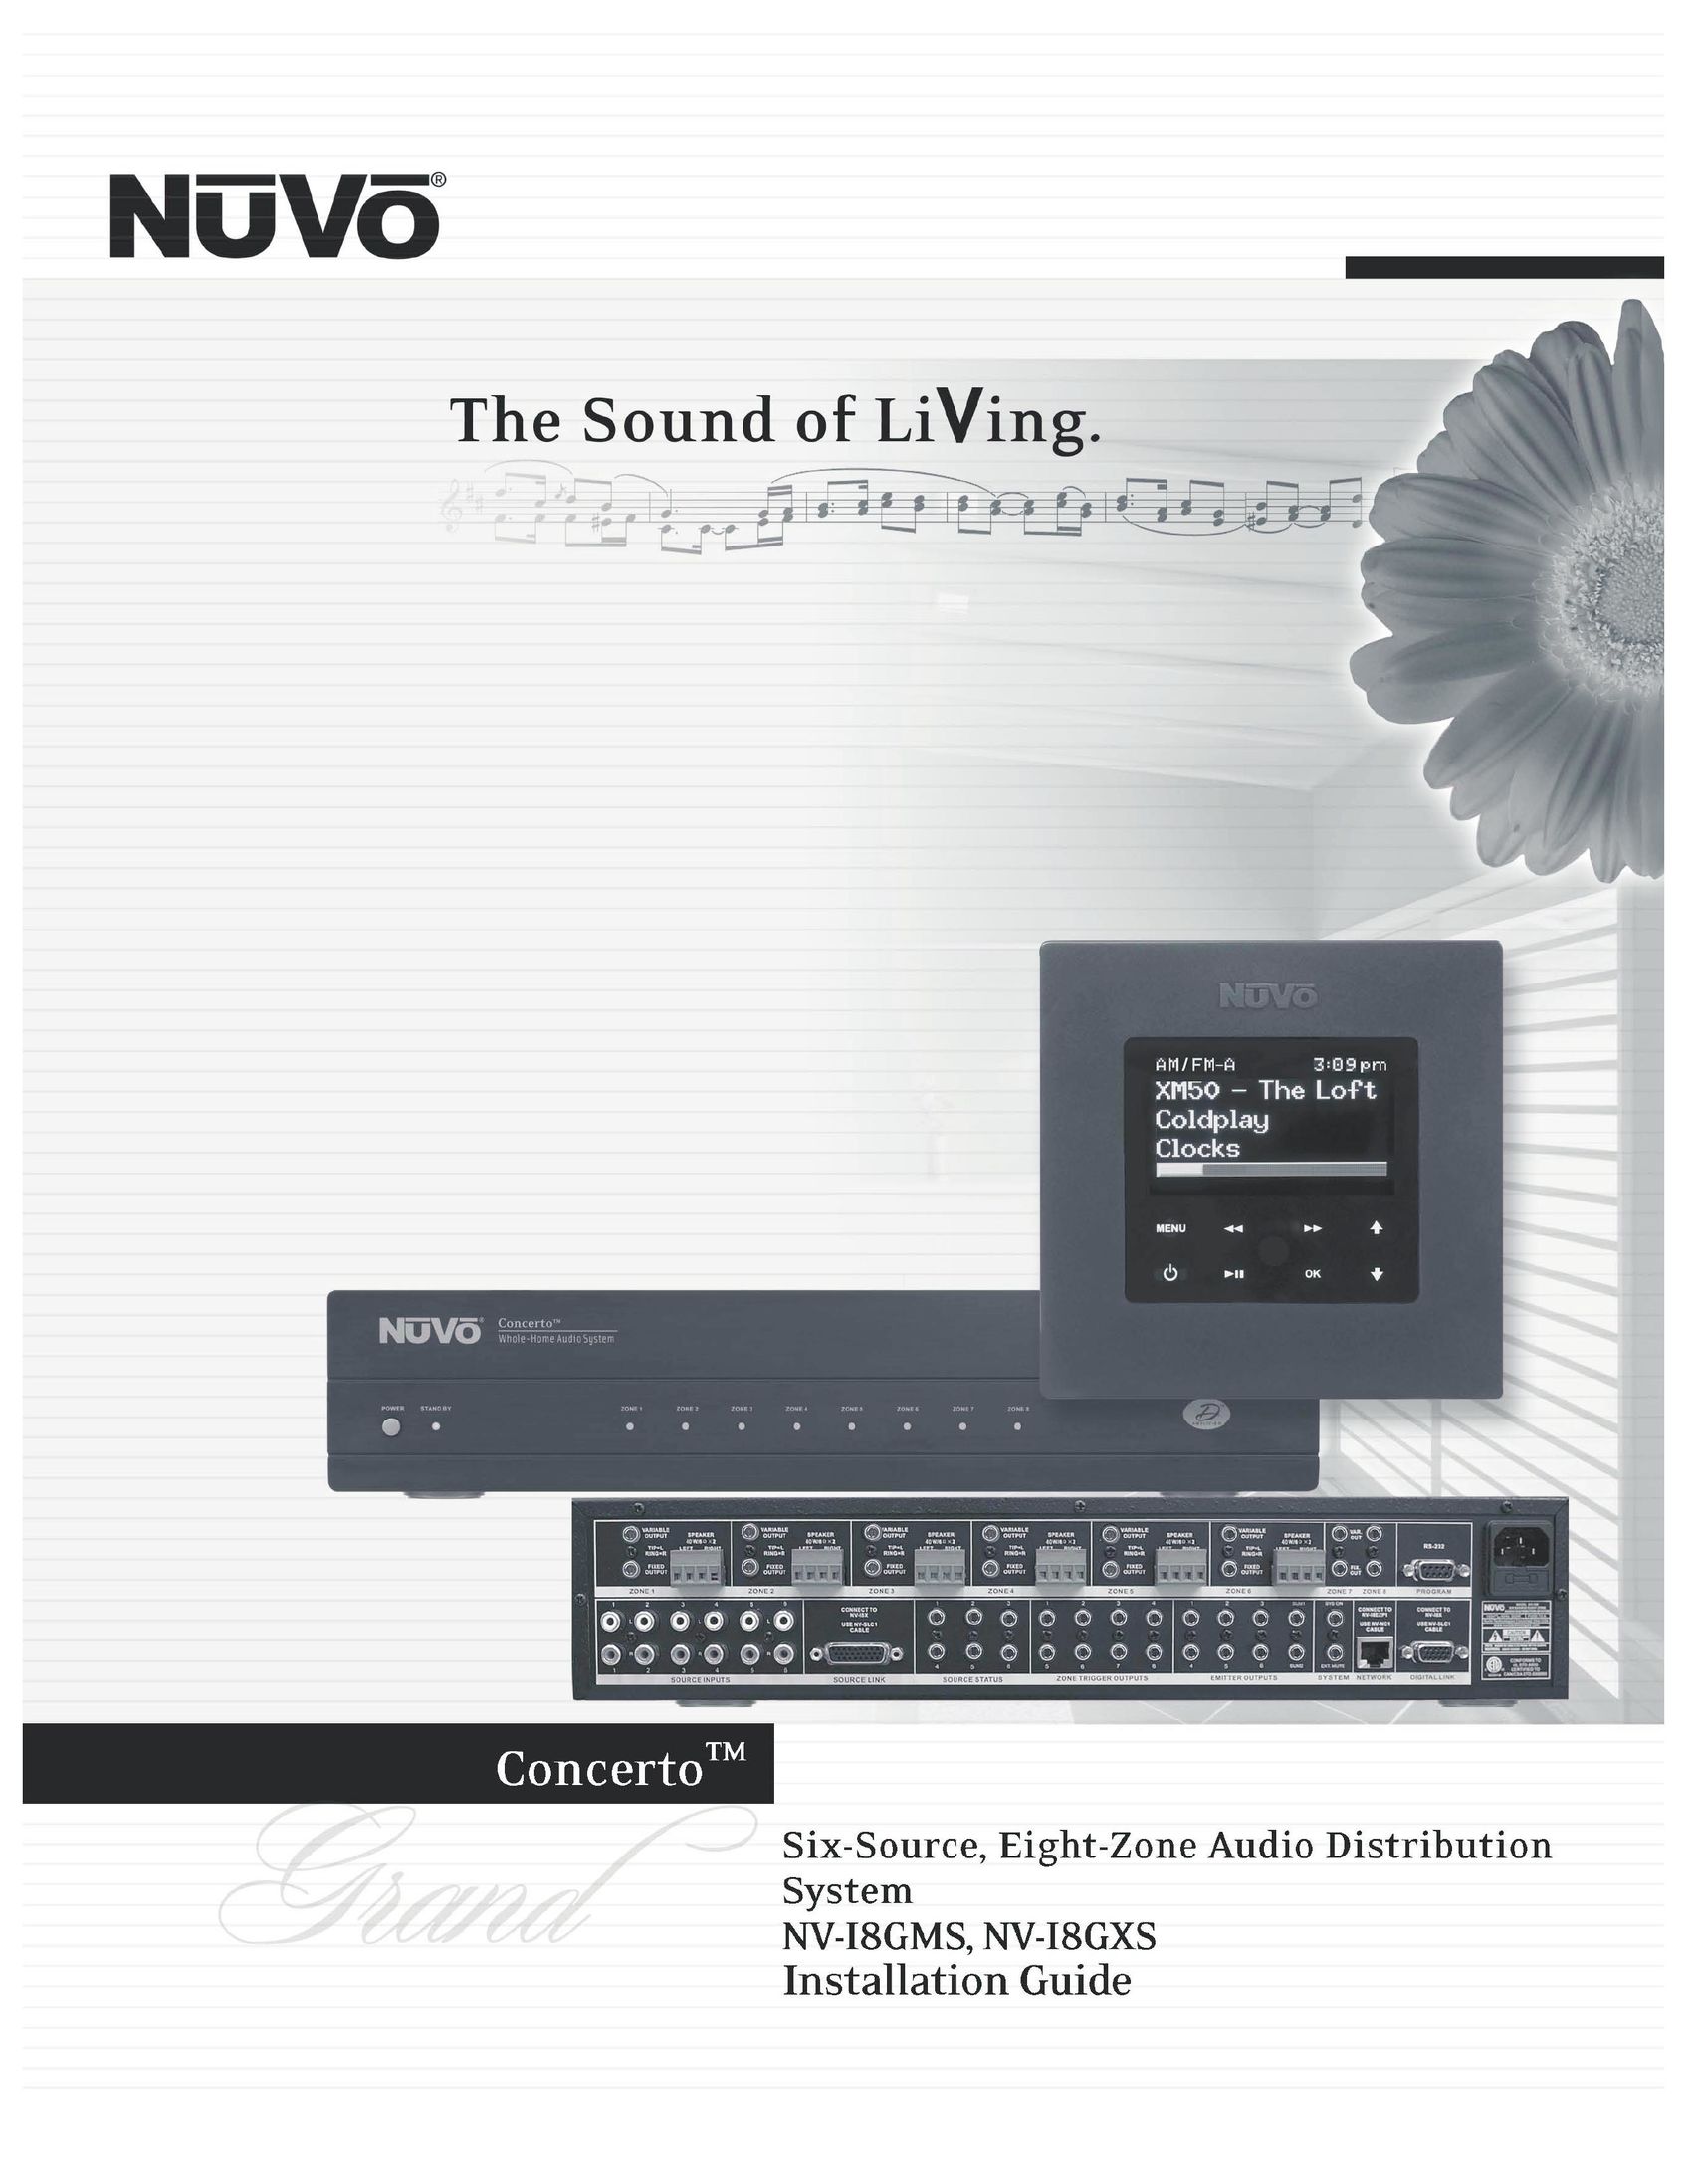 Nuvo NV-I8GMS, NV-I8GXS Stereo System User Manual